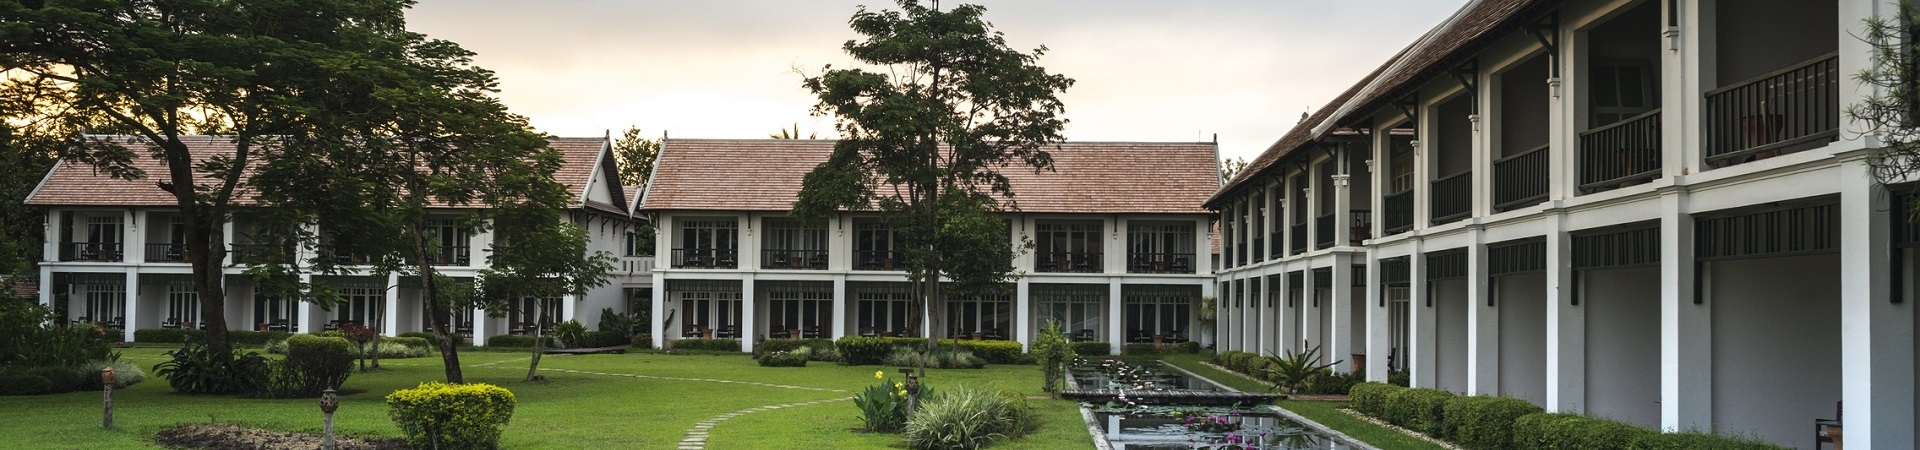 Image of The Grand Luang Prabang Hotel and Resort